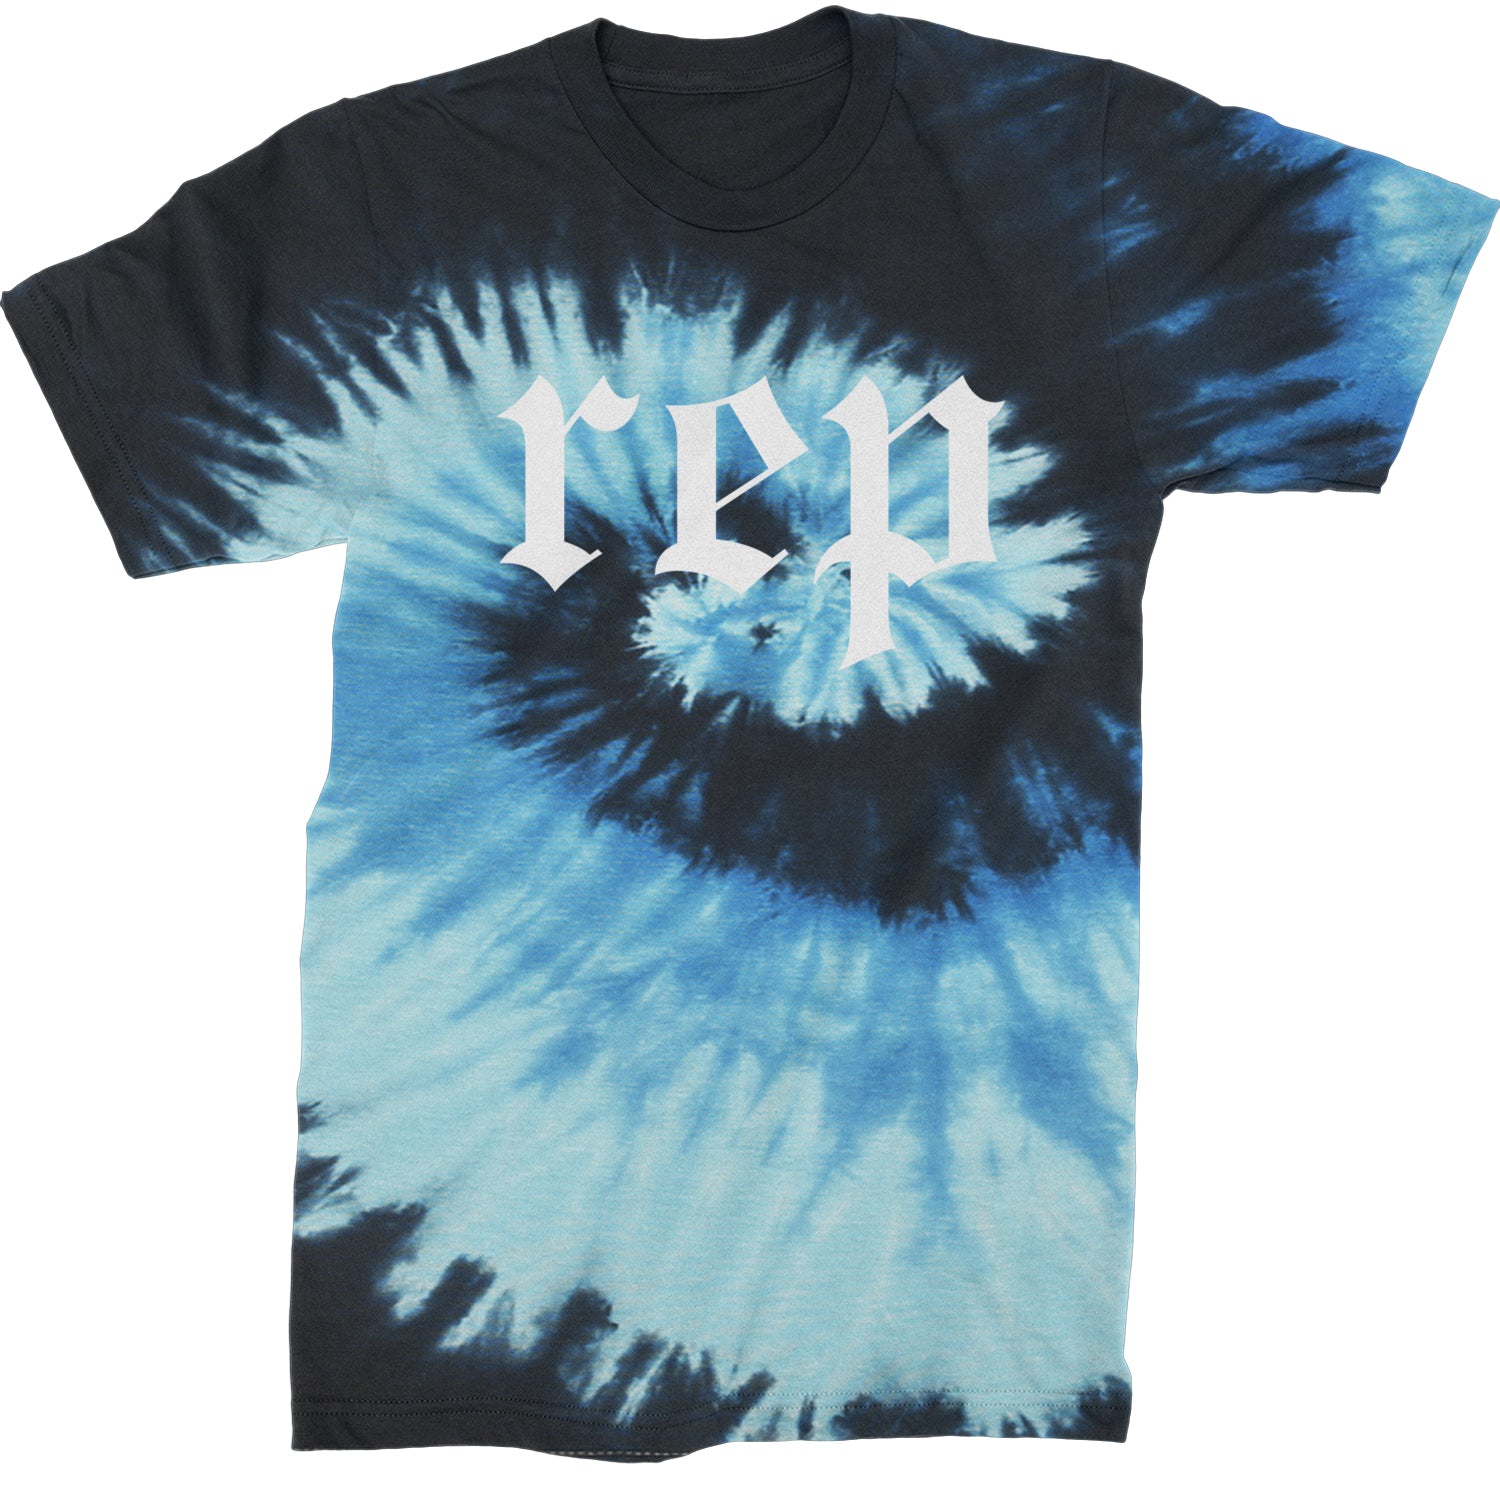 REP Reputation Eras Music Lover Gift Fan Favorite Mens T-shirt Tie-Dye Blue Ocean